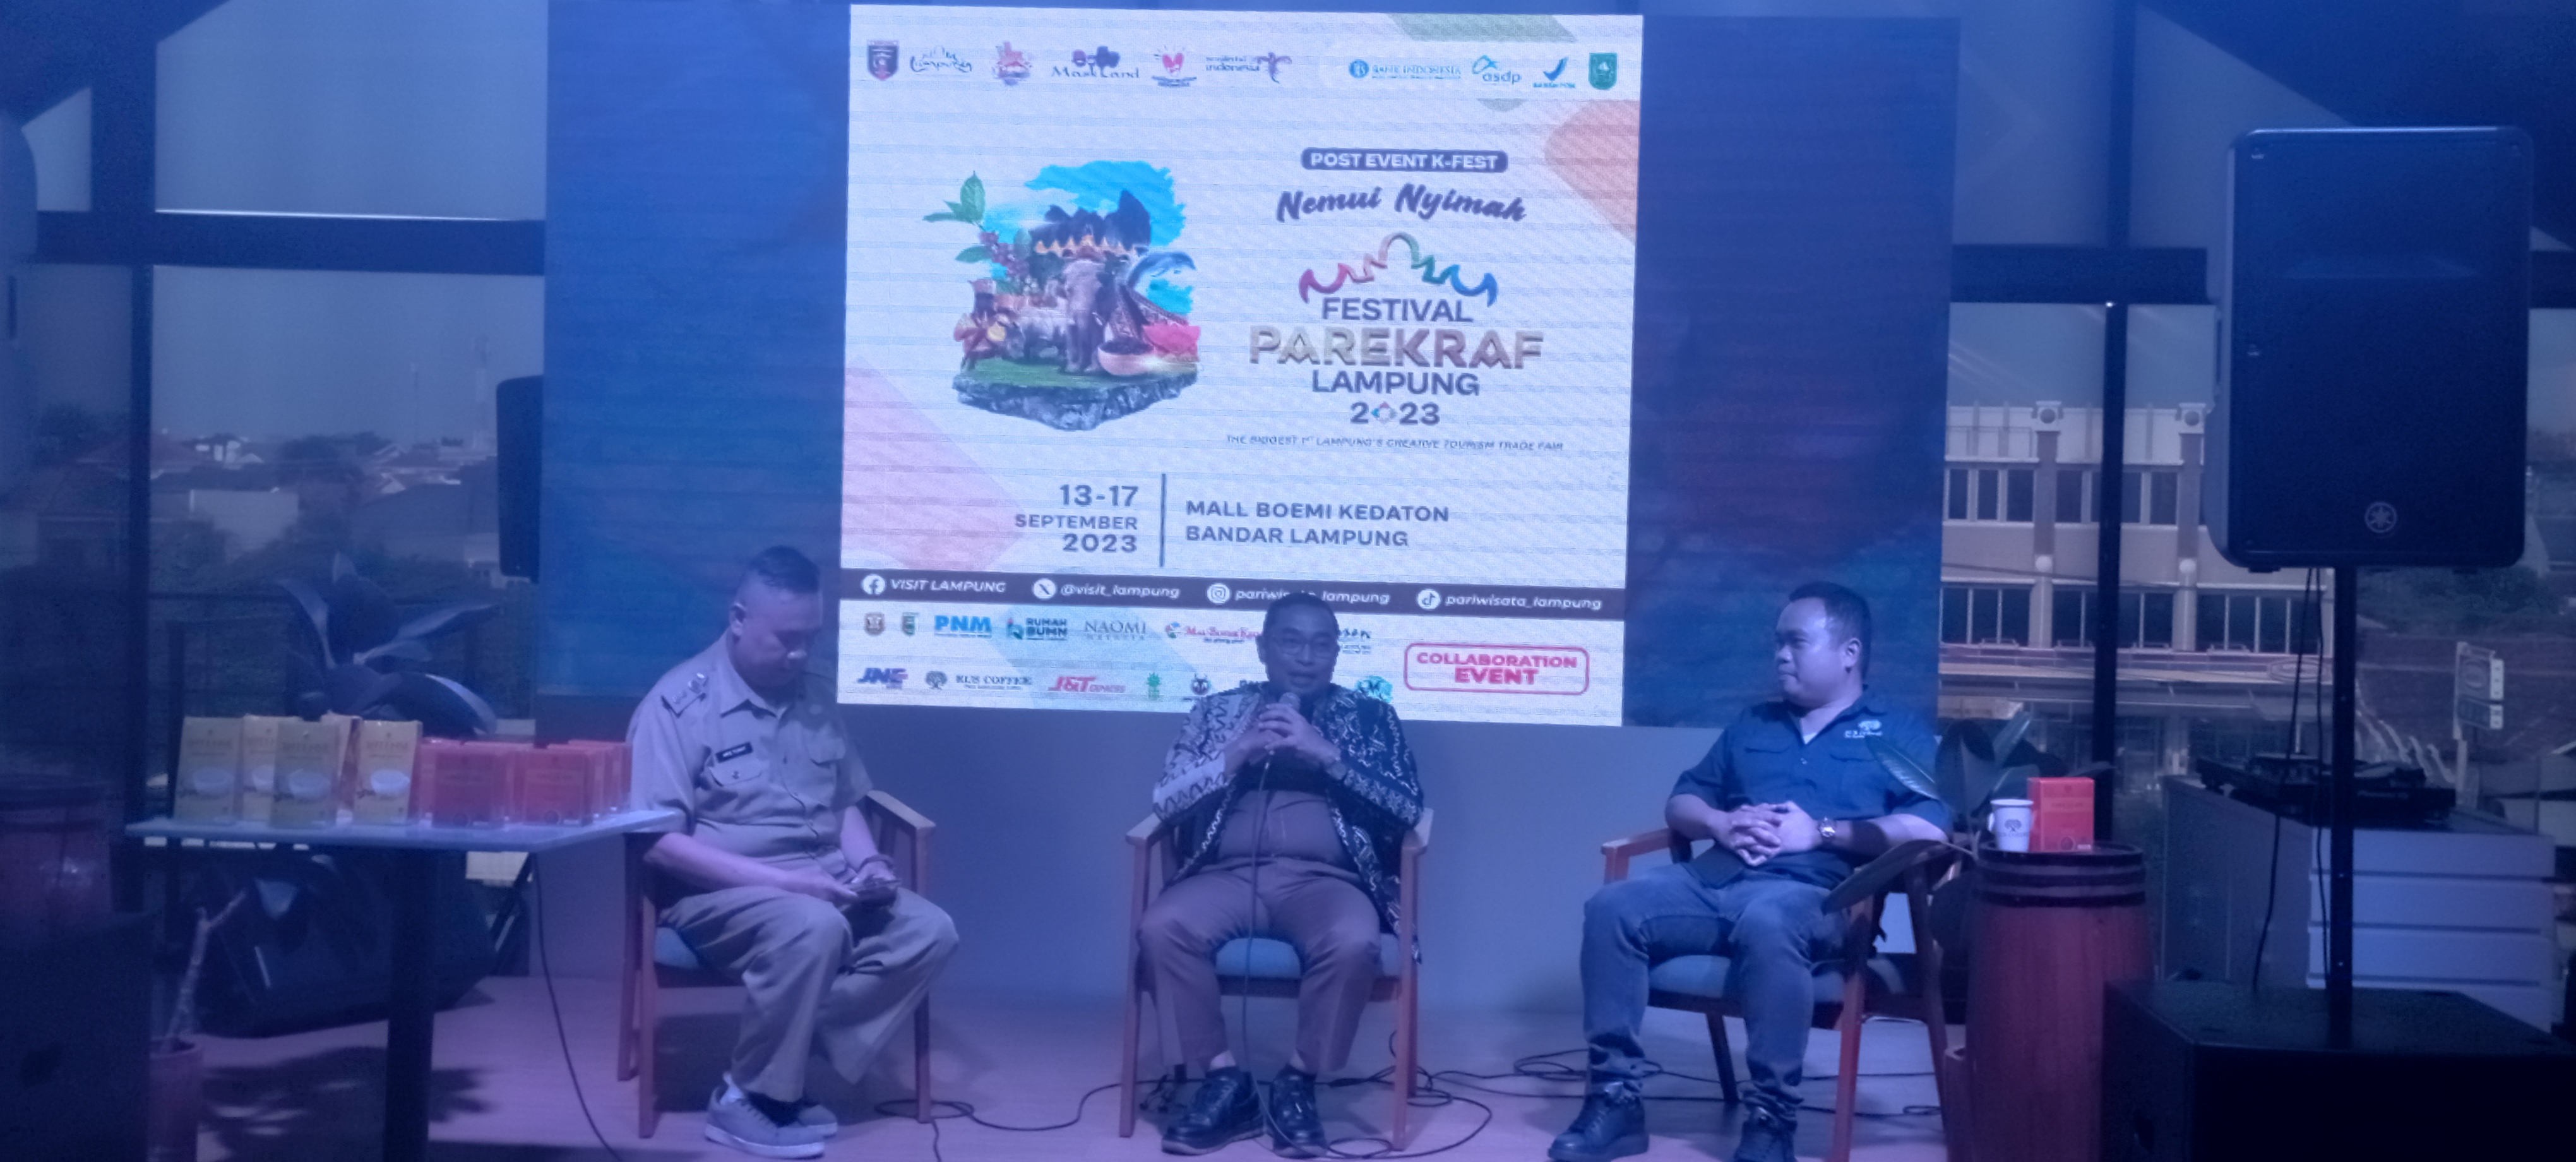 Saksikan, Disparekraf Gelar Festival Parekraf Lampung 2023 di Mall Boemi Kedaton 13 -17 September 2023